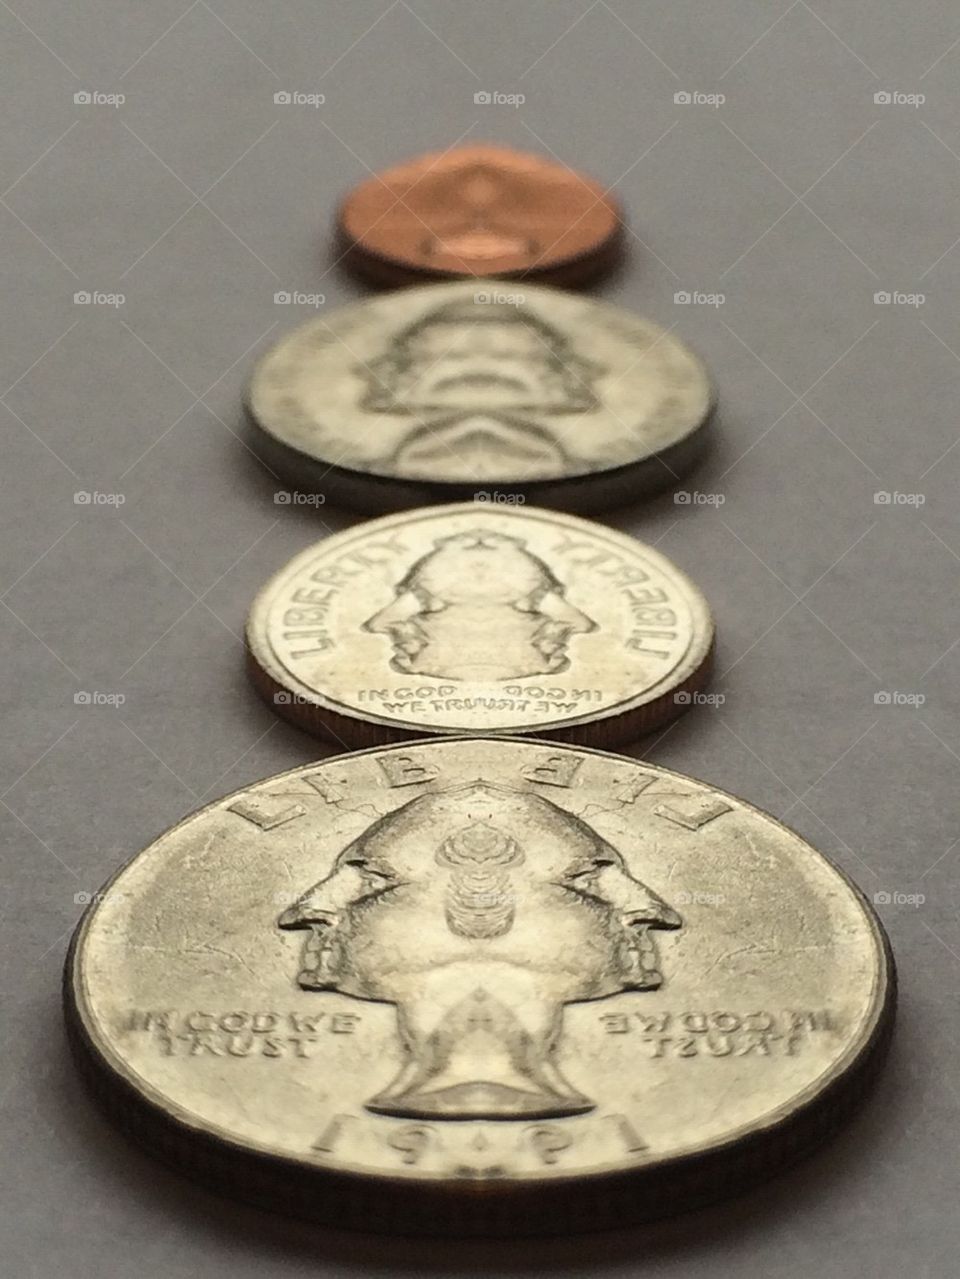 Double faced coins